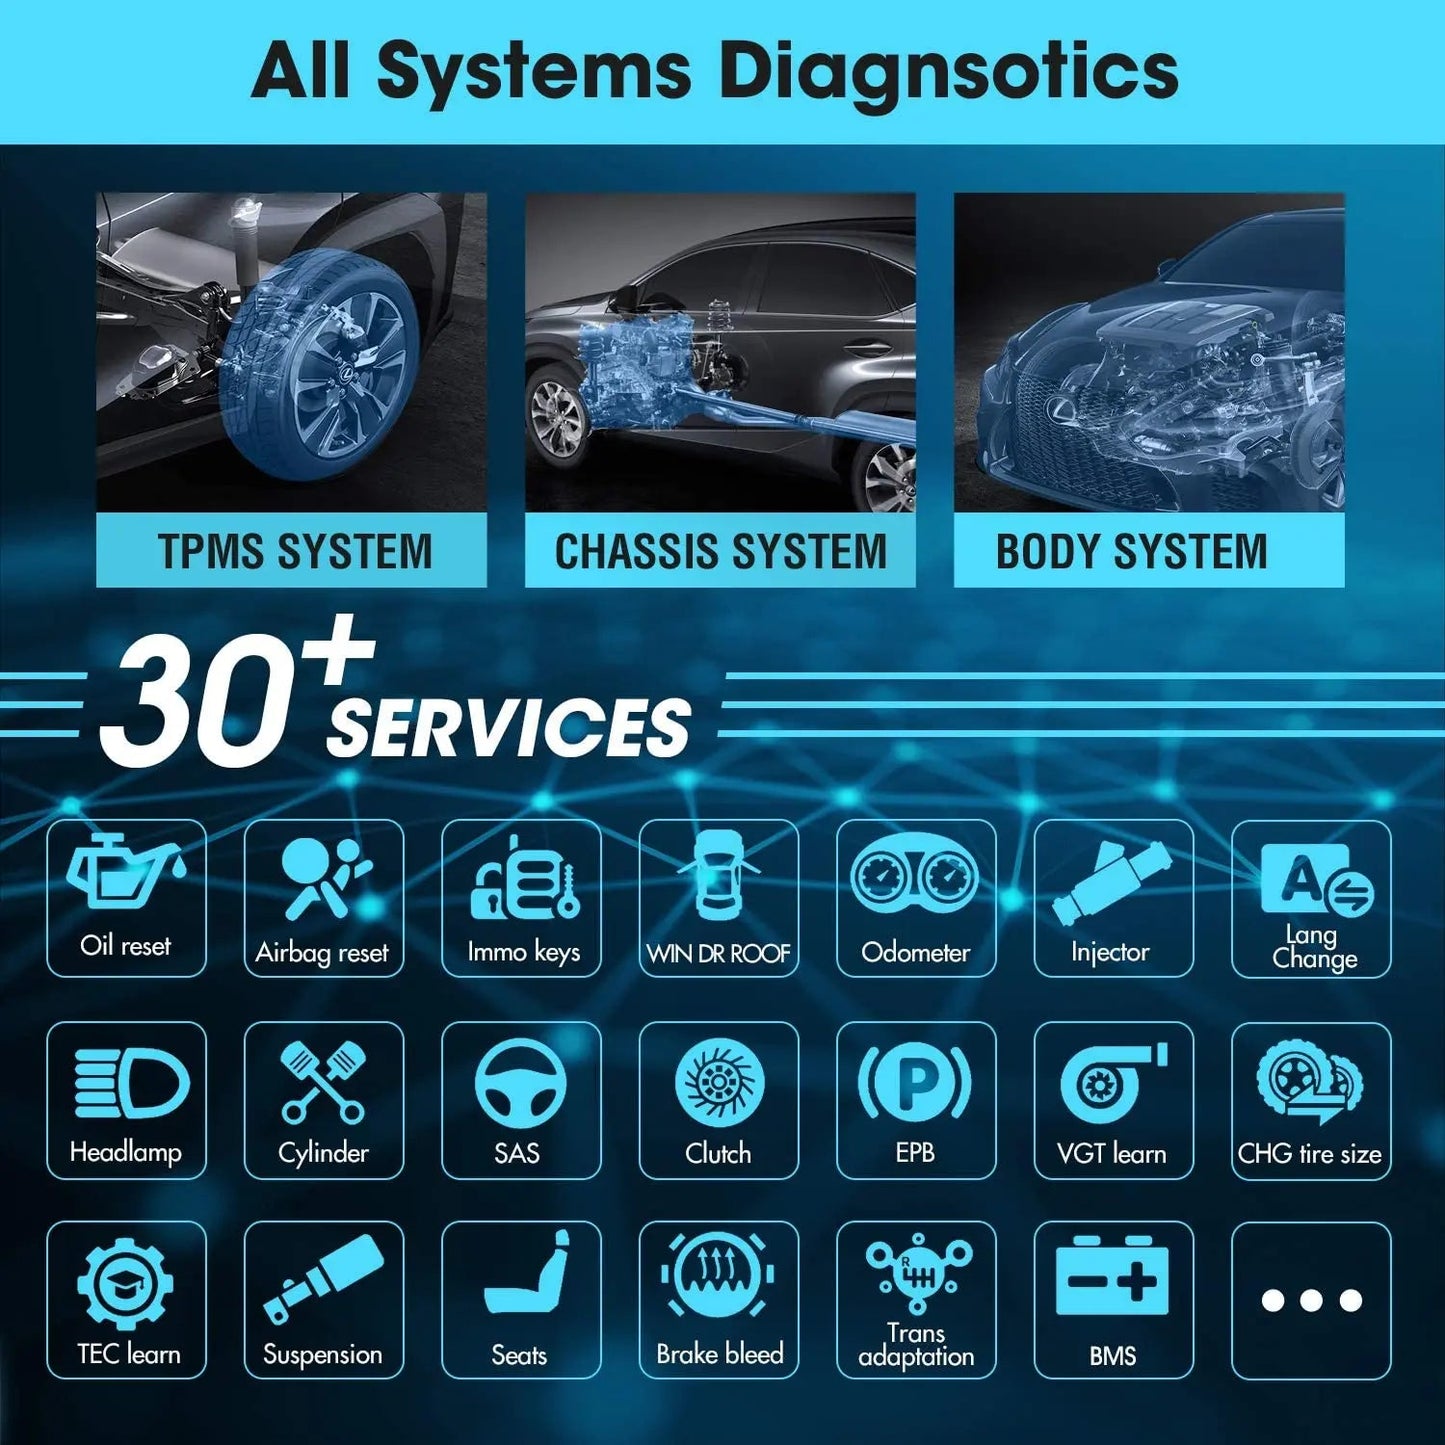 Autel Scanner MaxiSys Ultra Intelligent Diagnostic Tool ECU Programming ECU Coding Automotive Tools Intelligent Diagnostic Tool - Dynamex